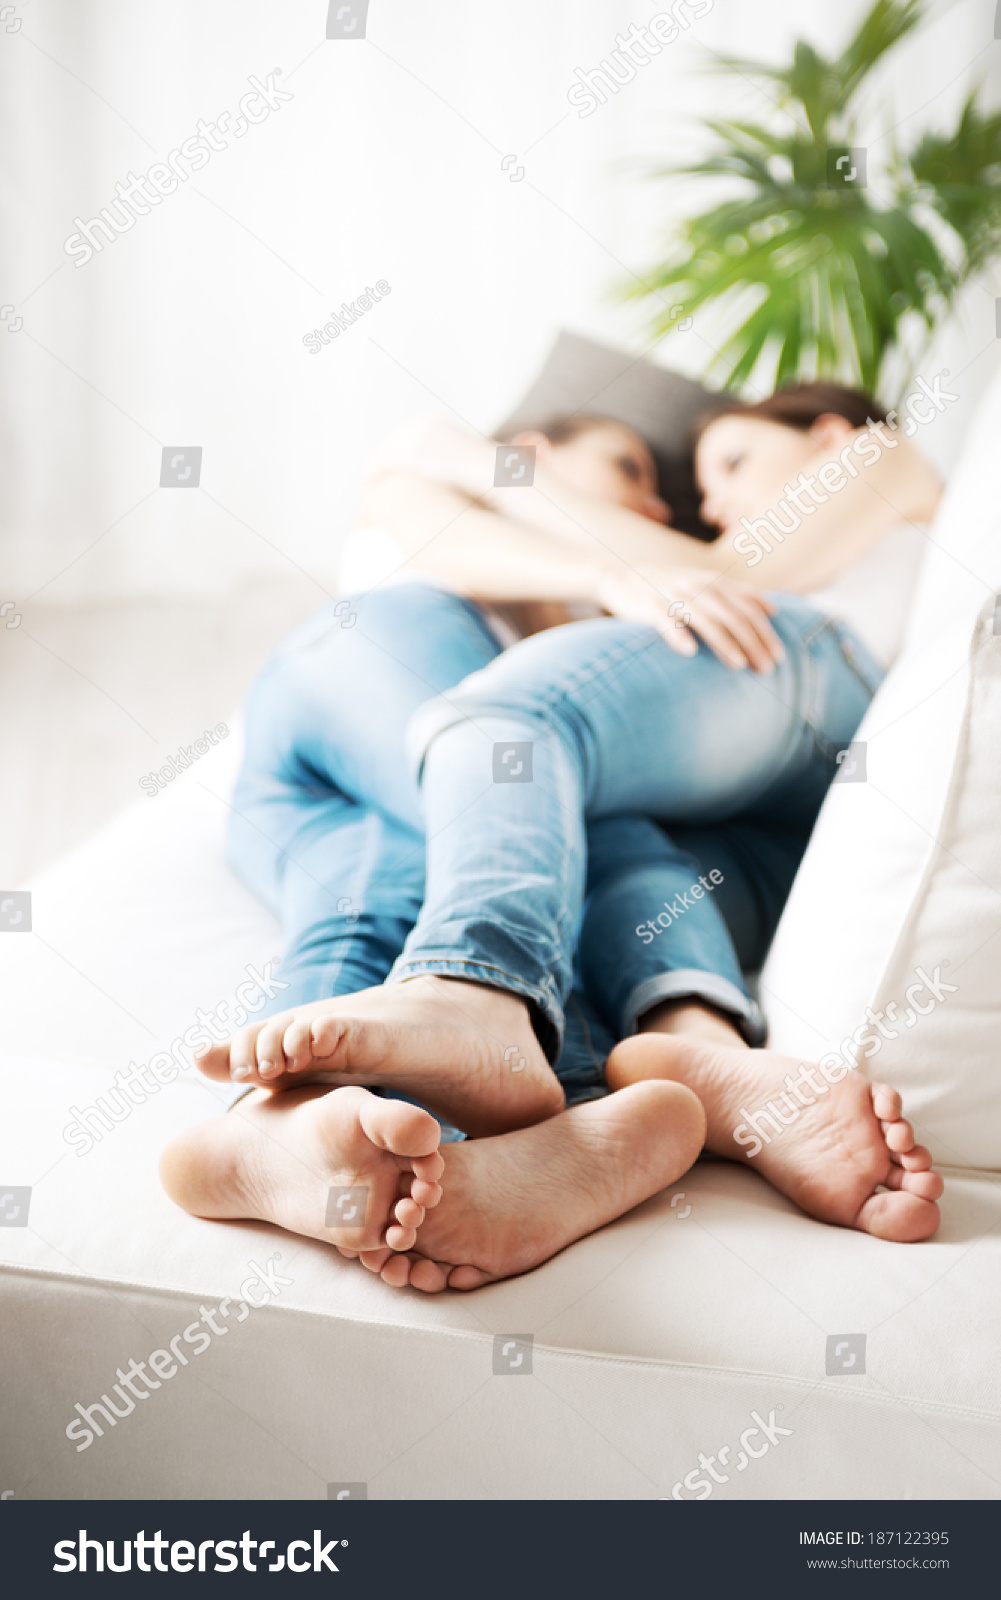 Lesbian Foot Pics